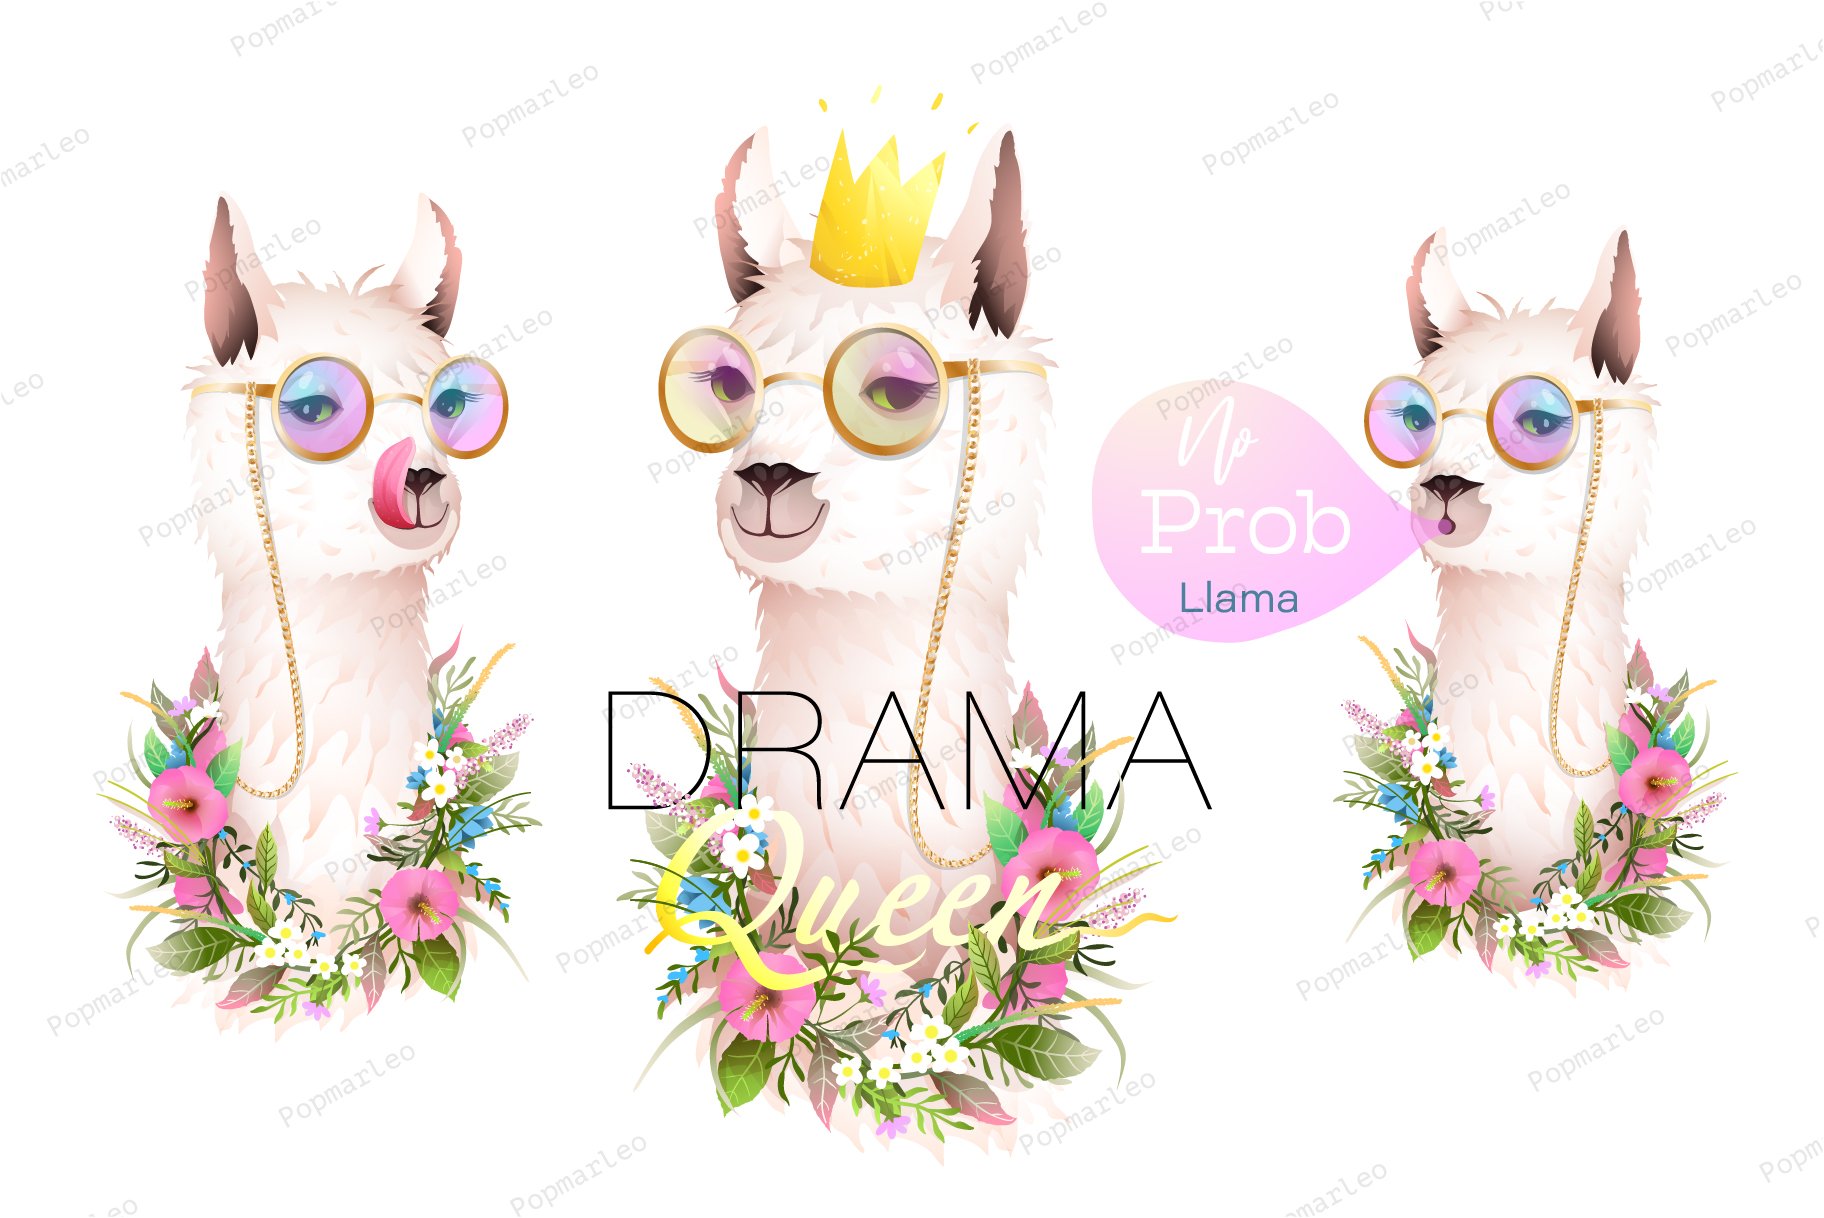 Llama Drama Queen, No Problem Lama cover image.